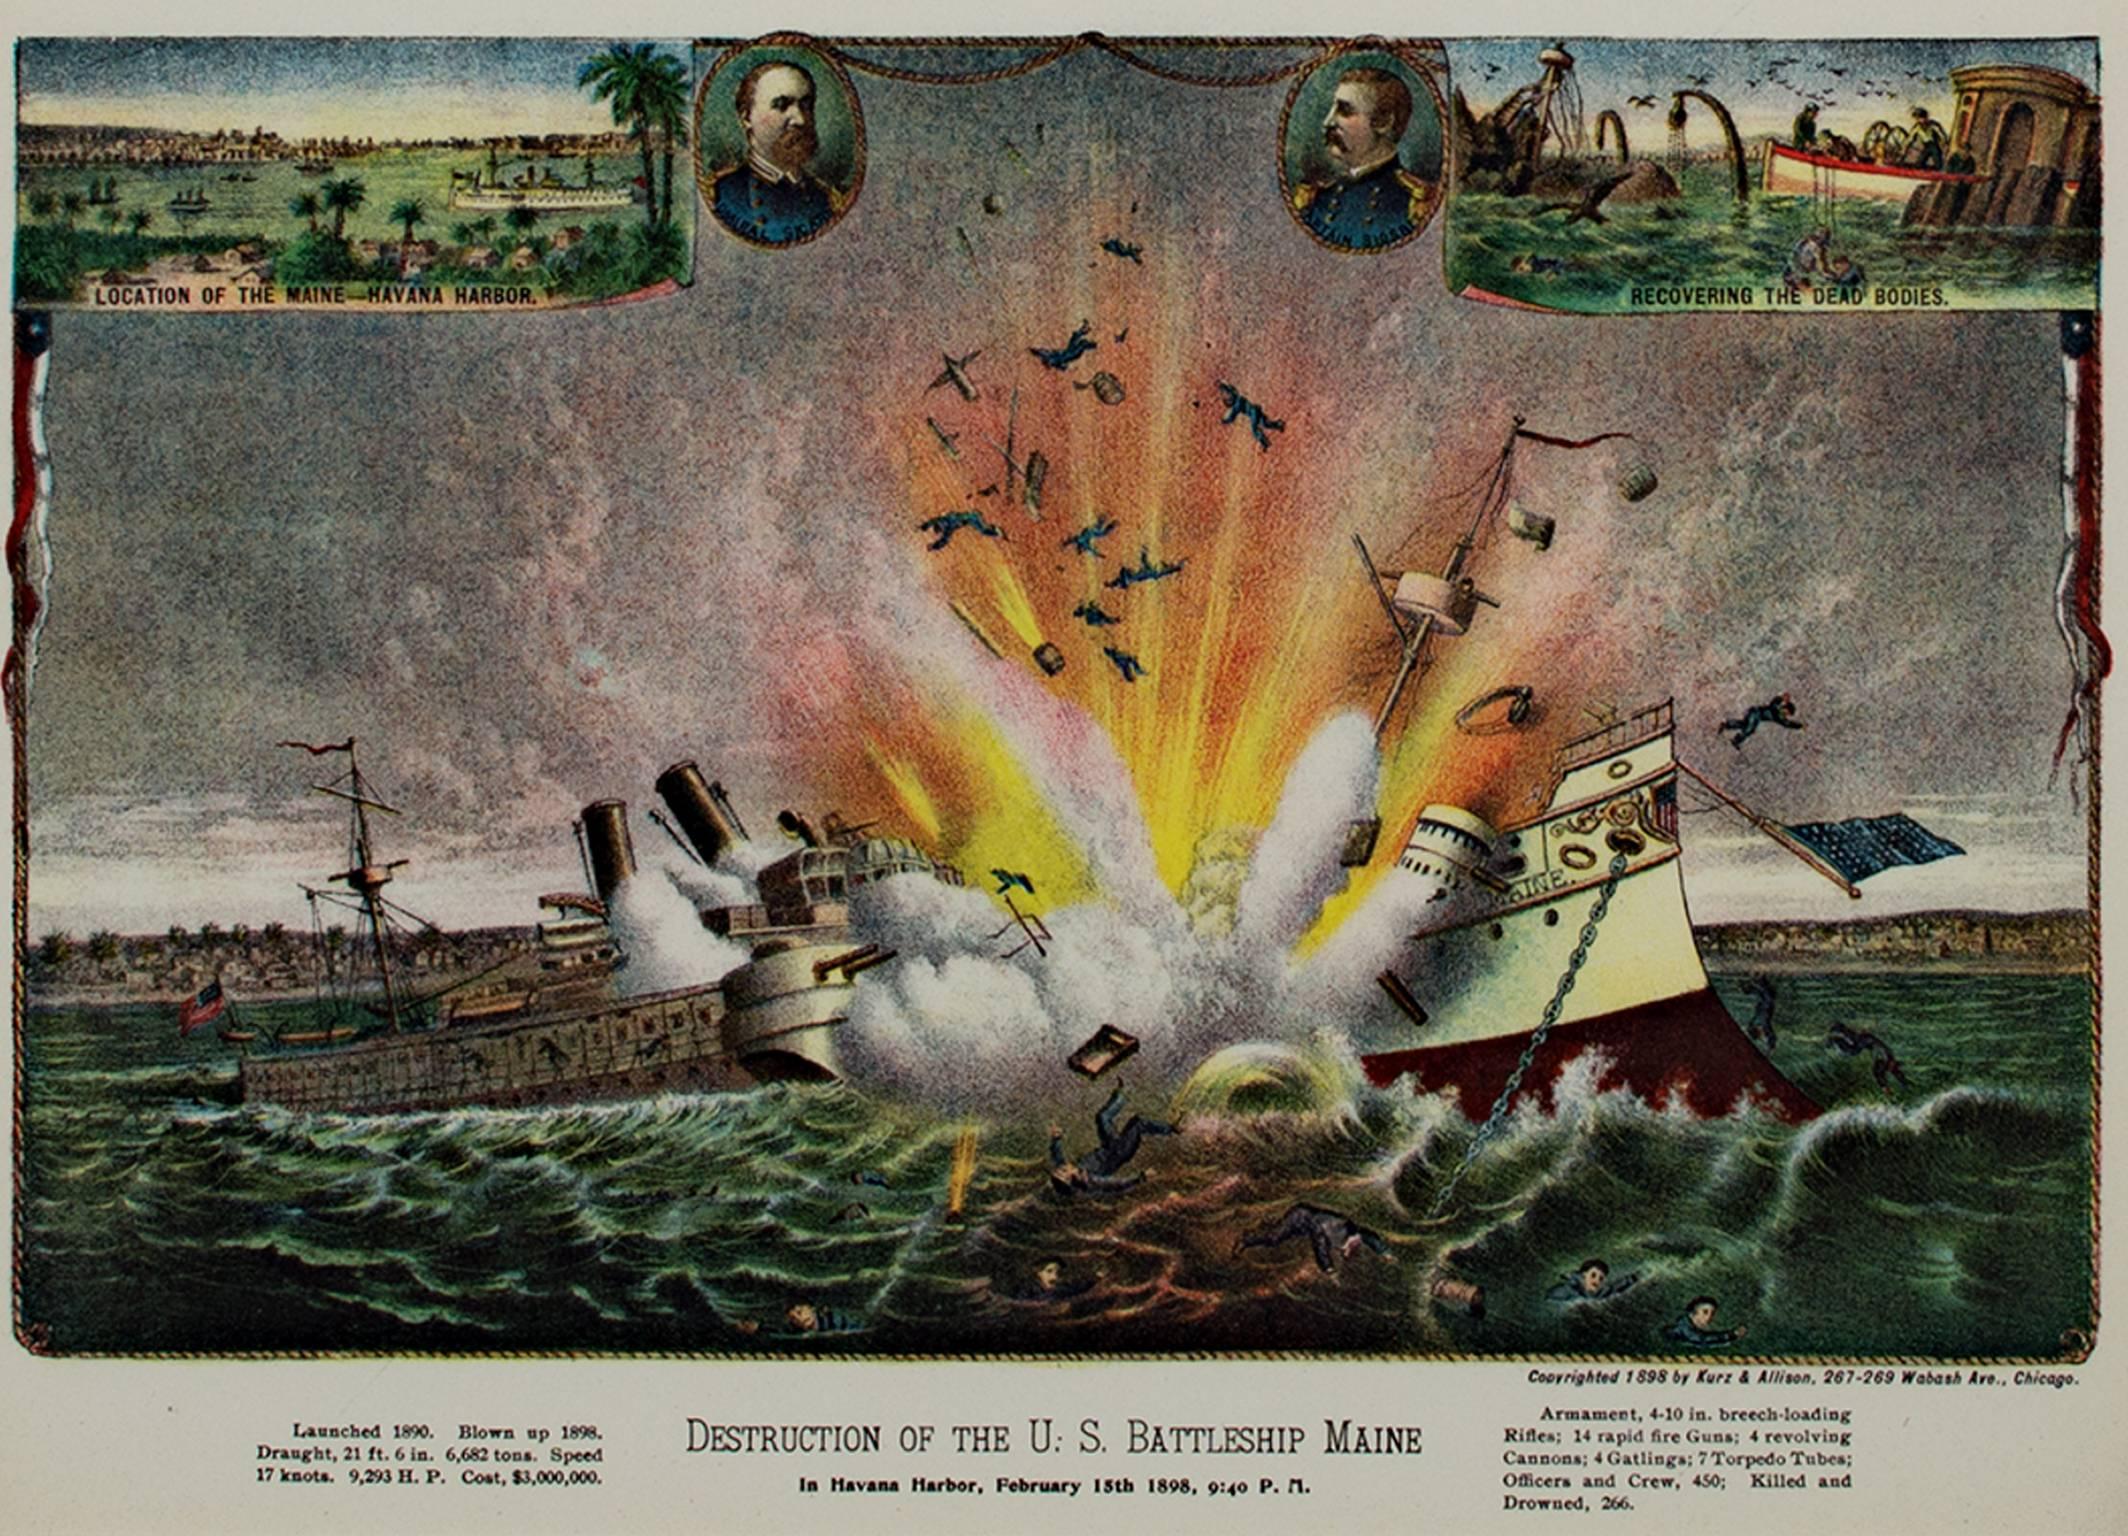 "Destruction of the U.S. Battleship Maine in Havana Harbor, " by Kurz & Allison - Print by Kurz and Allison